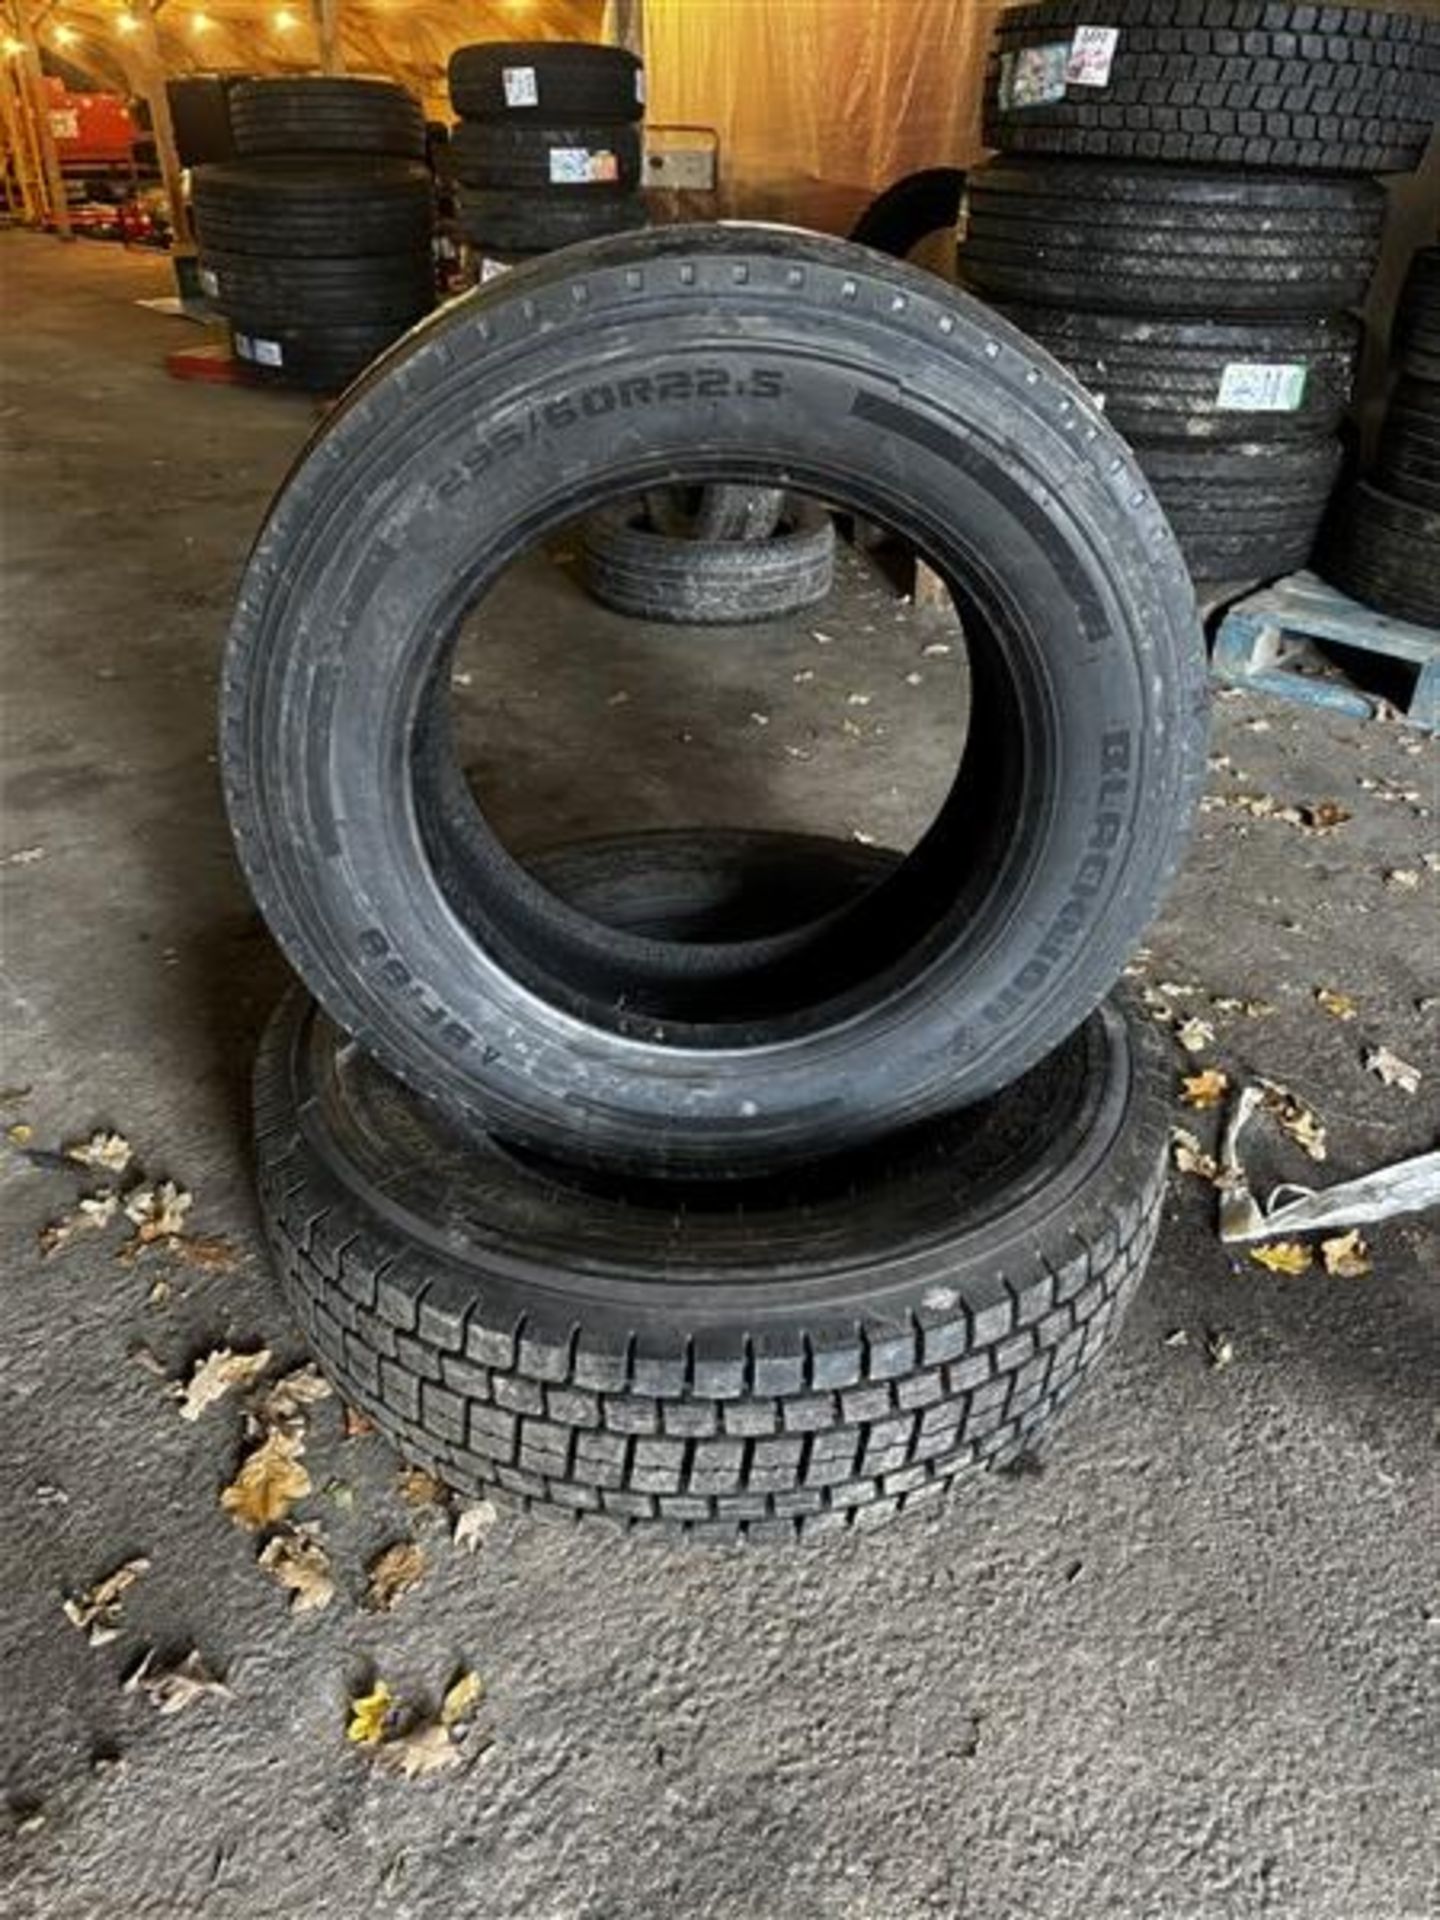 x1 BlackLion BF188 Tyre Size: 295/60 R 22.5 & x1 Fullrun TB755 Tyre Size: 315/70 R 22.5 *N.B. This